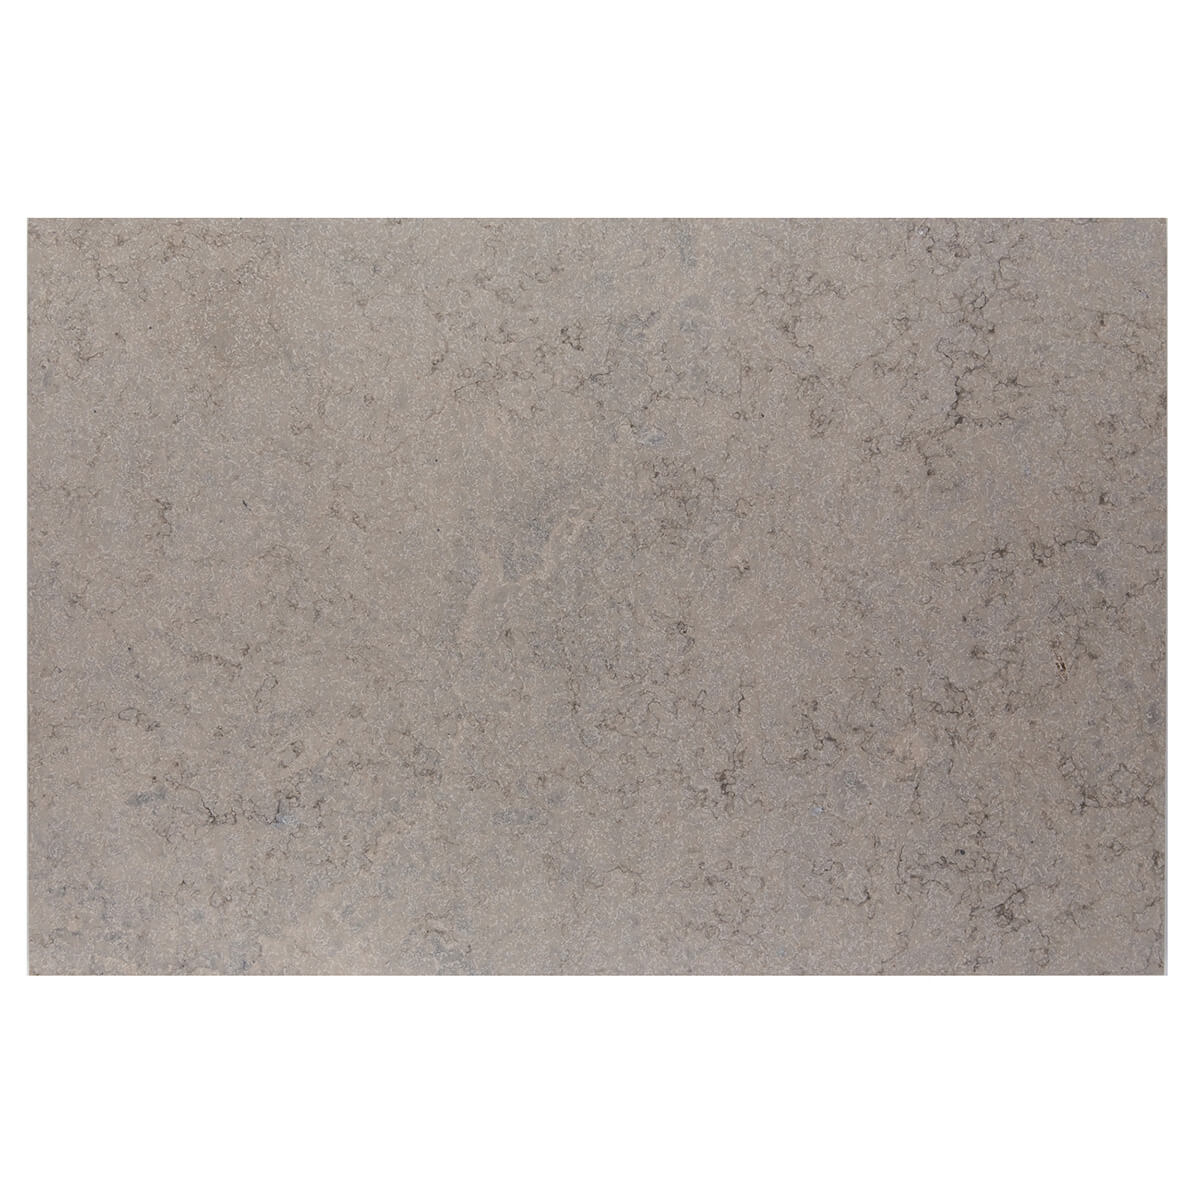 haussmann london grey limestone rectangle natural stone field tile 16x24 flamed